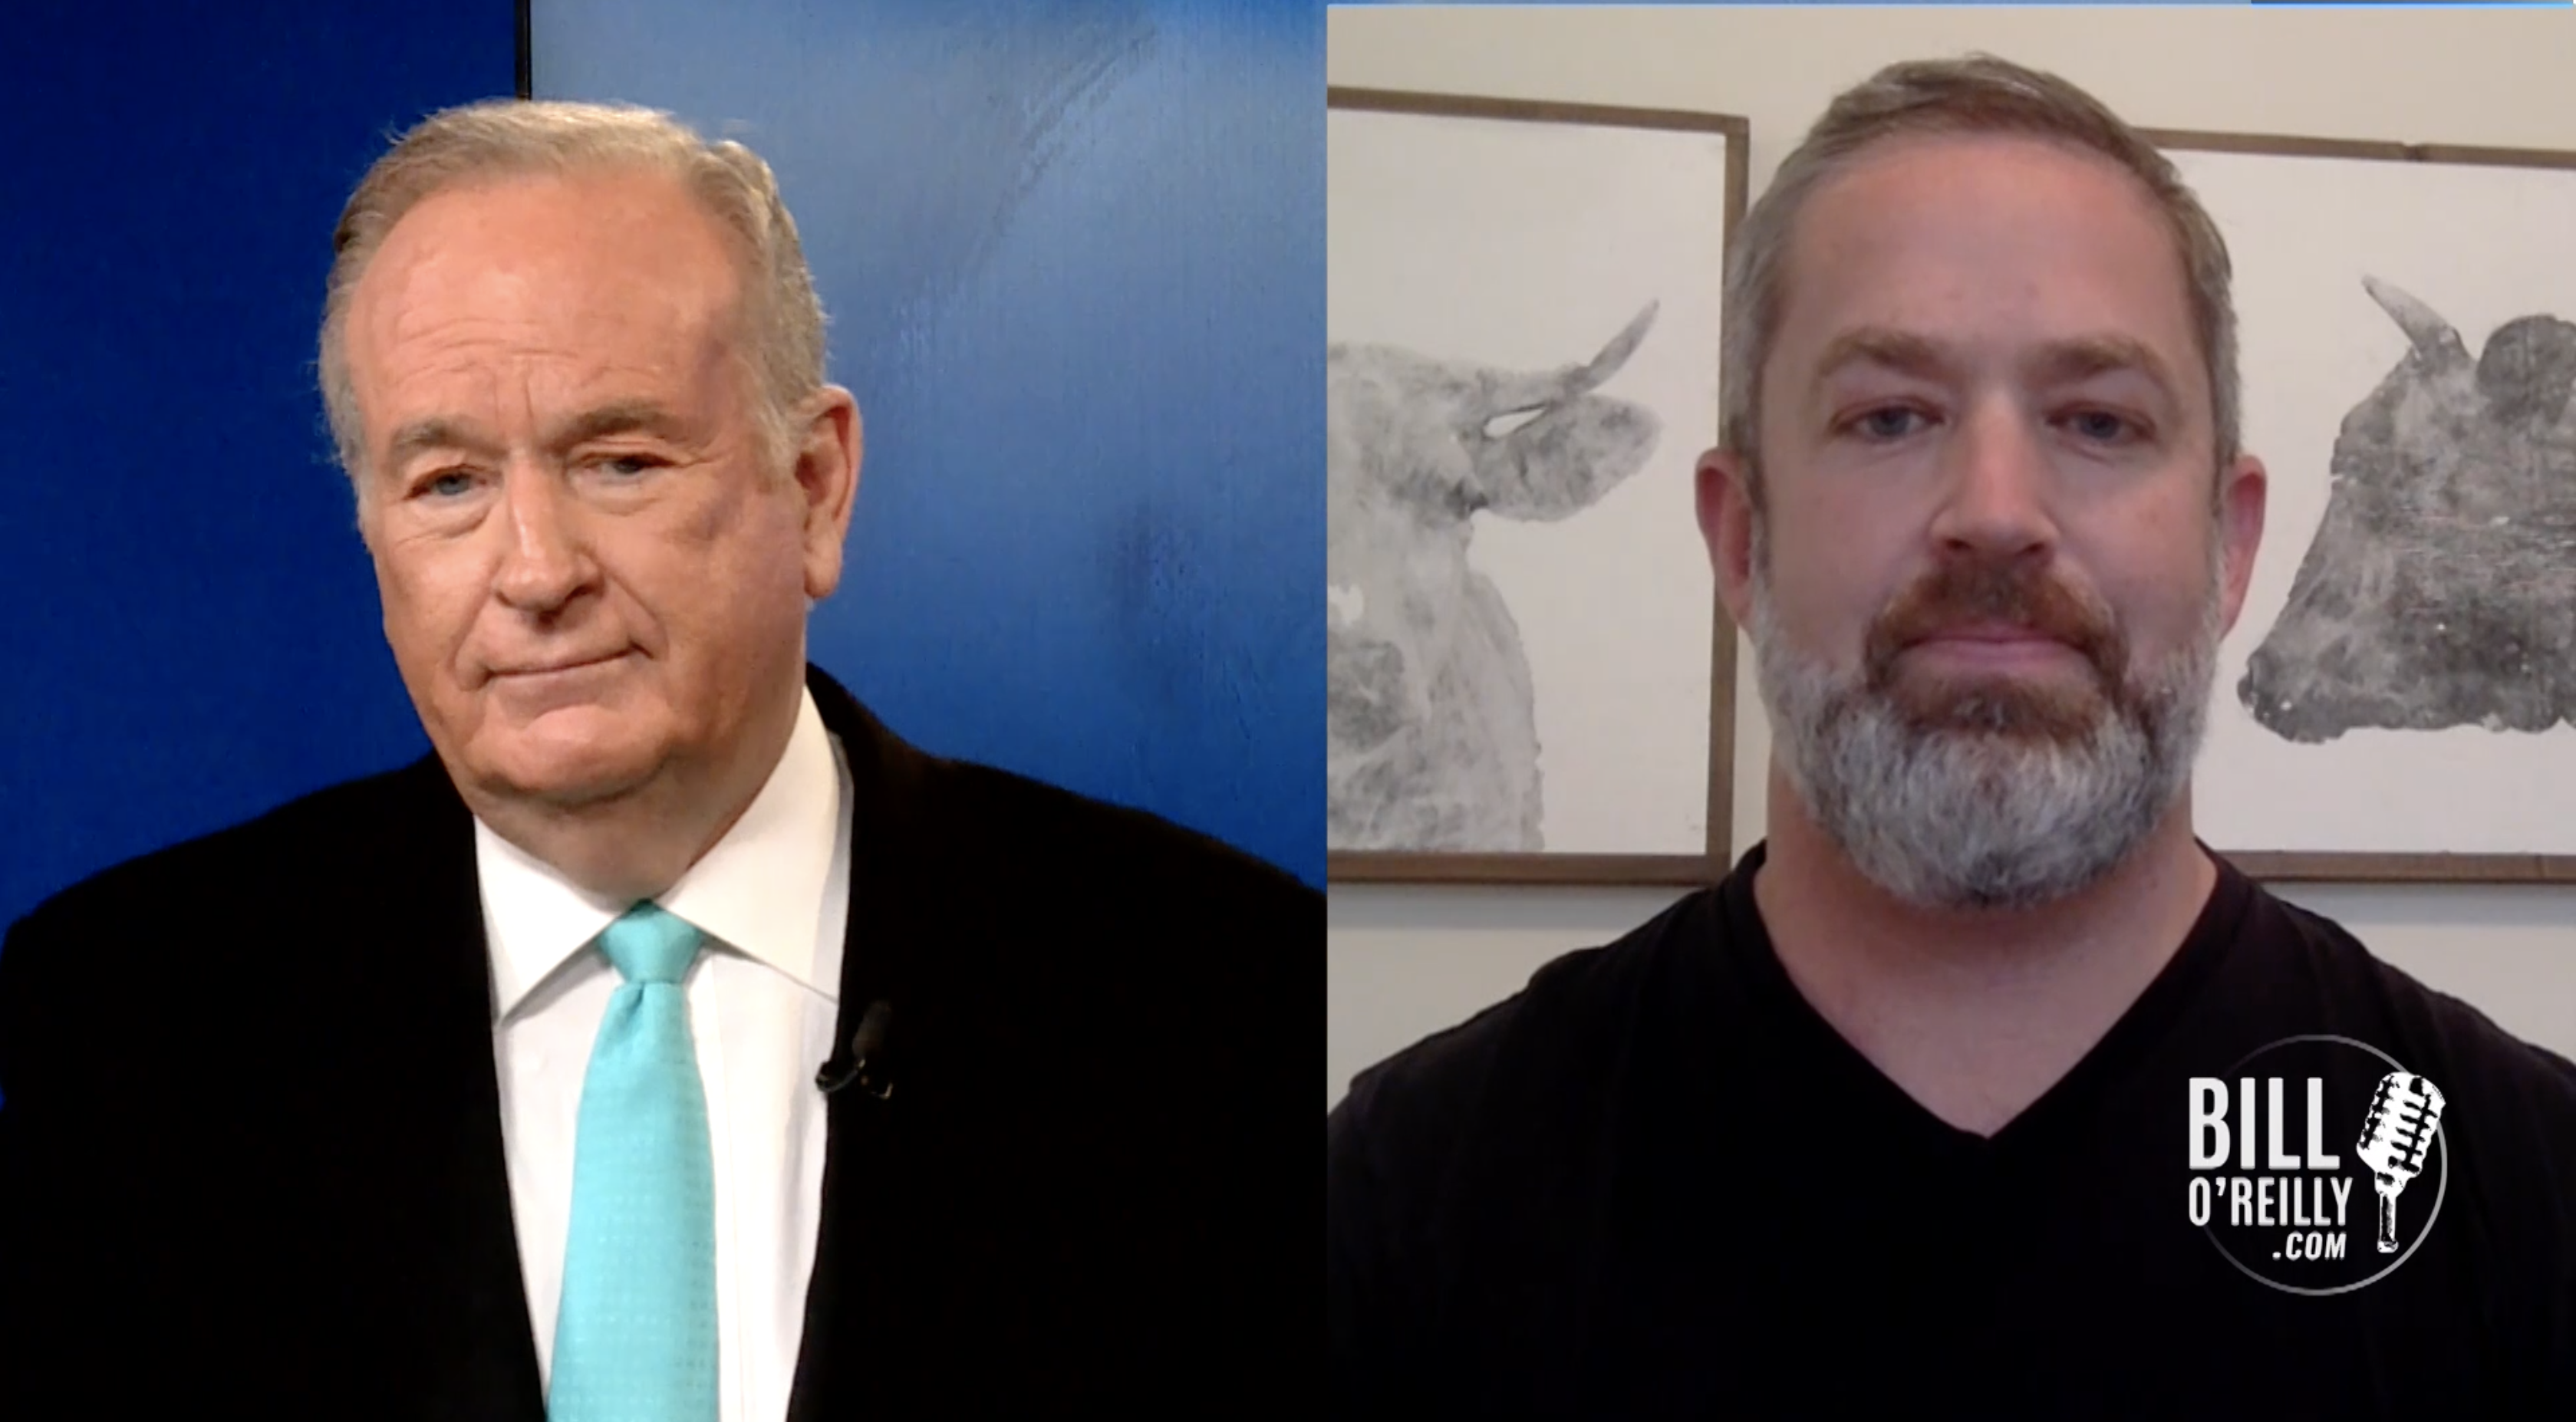 Bill O'Reilly and Blain Rathmeier on Oprah 2020 and President Trump's Media Strategy